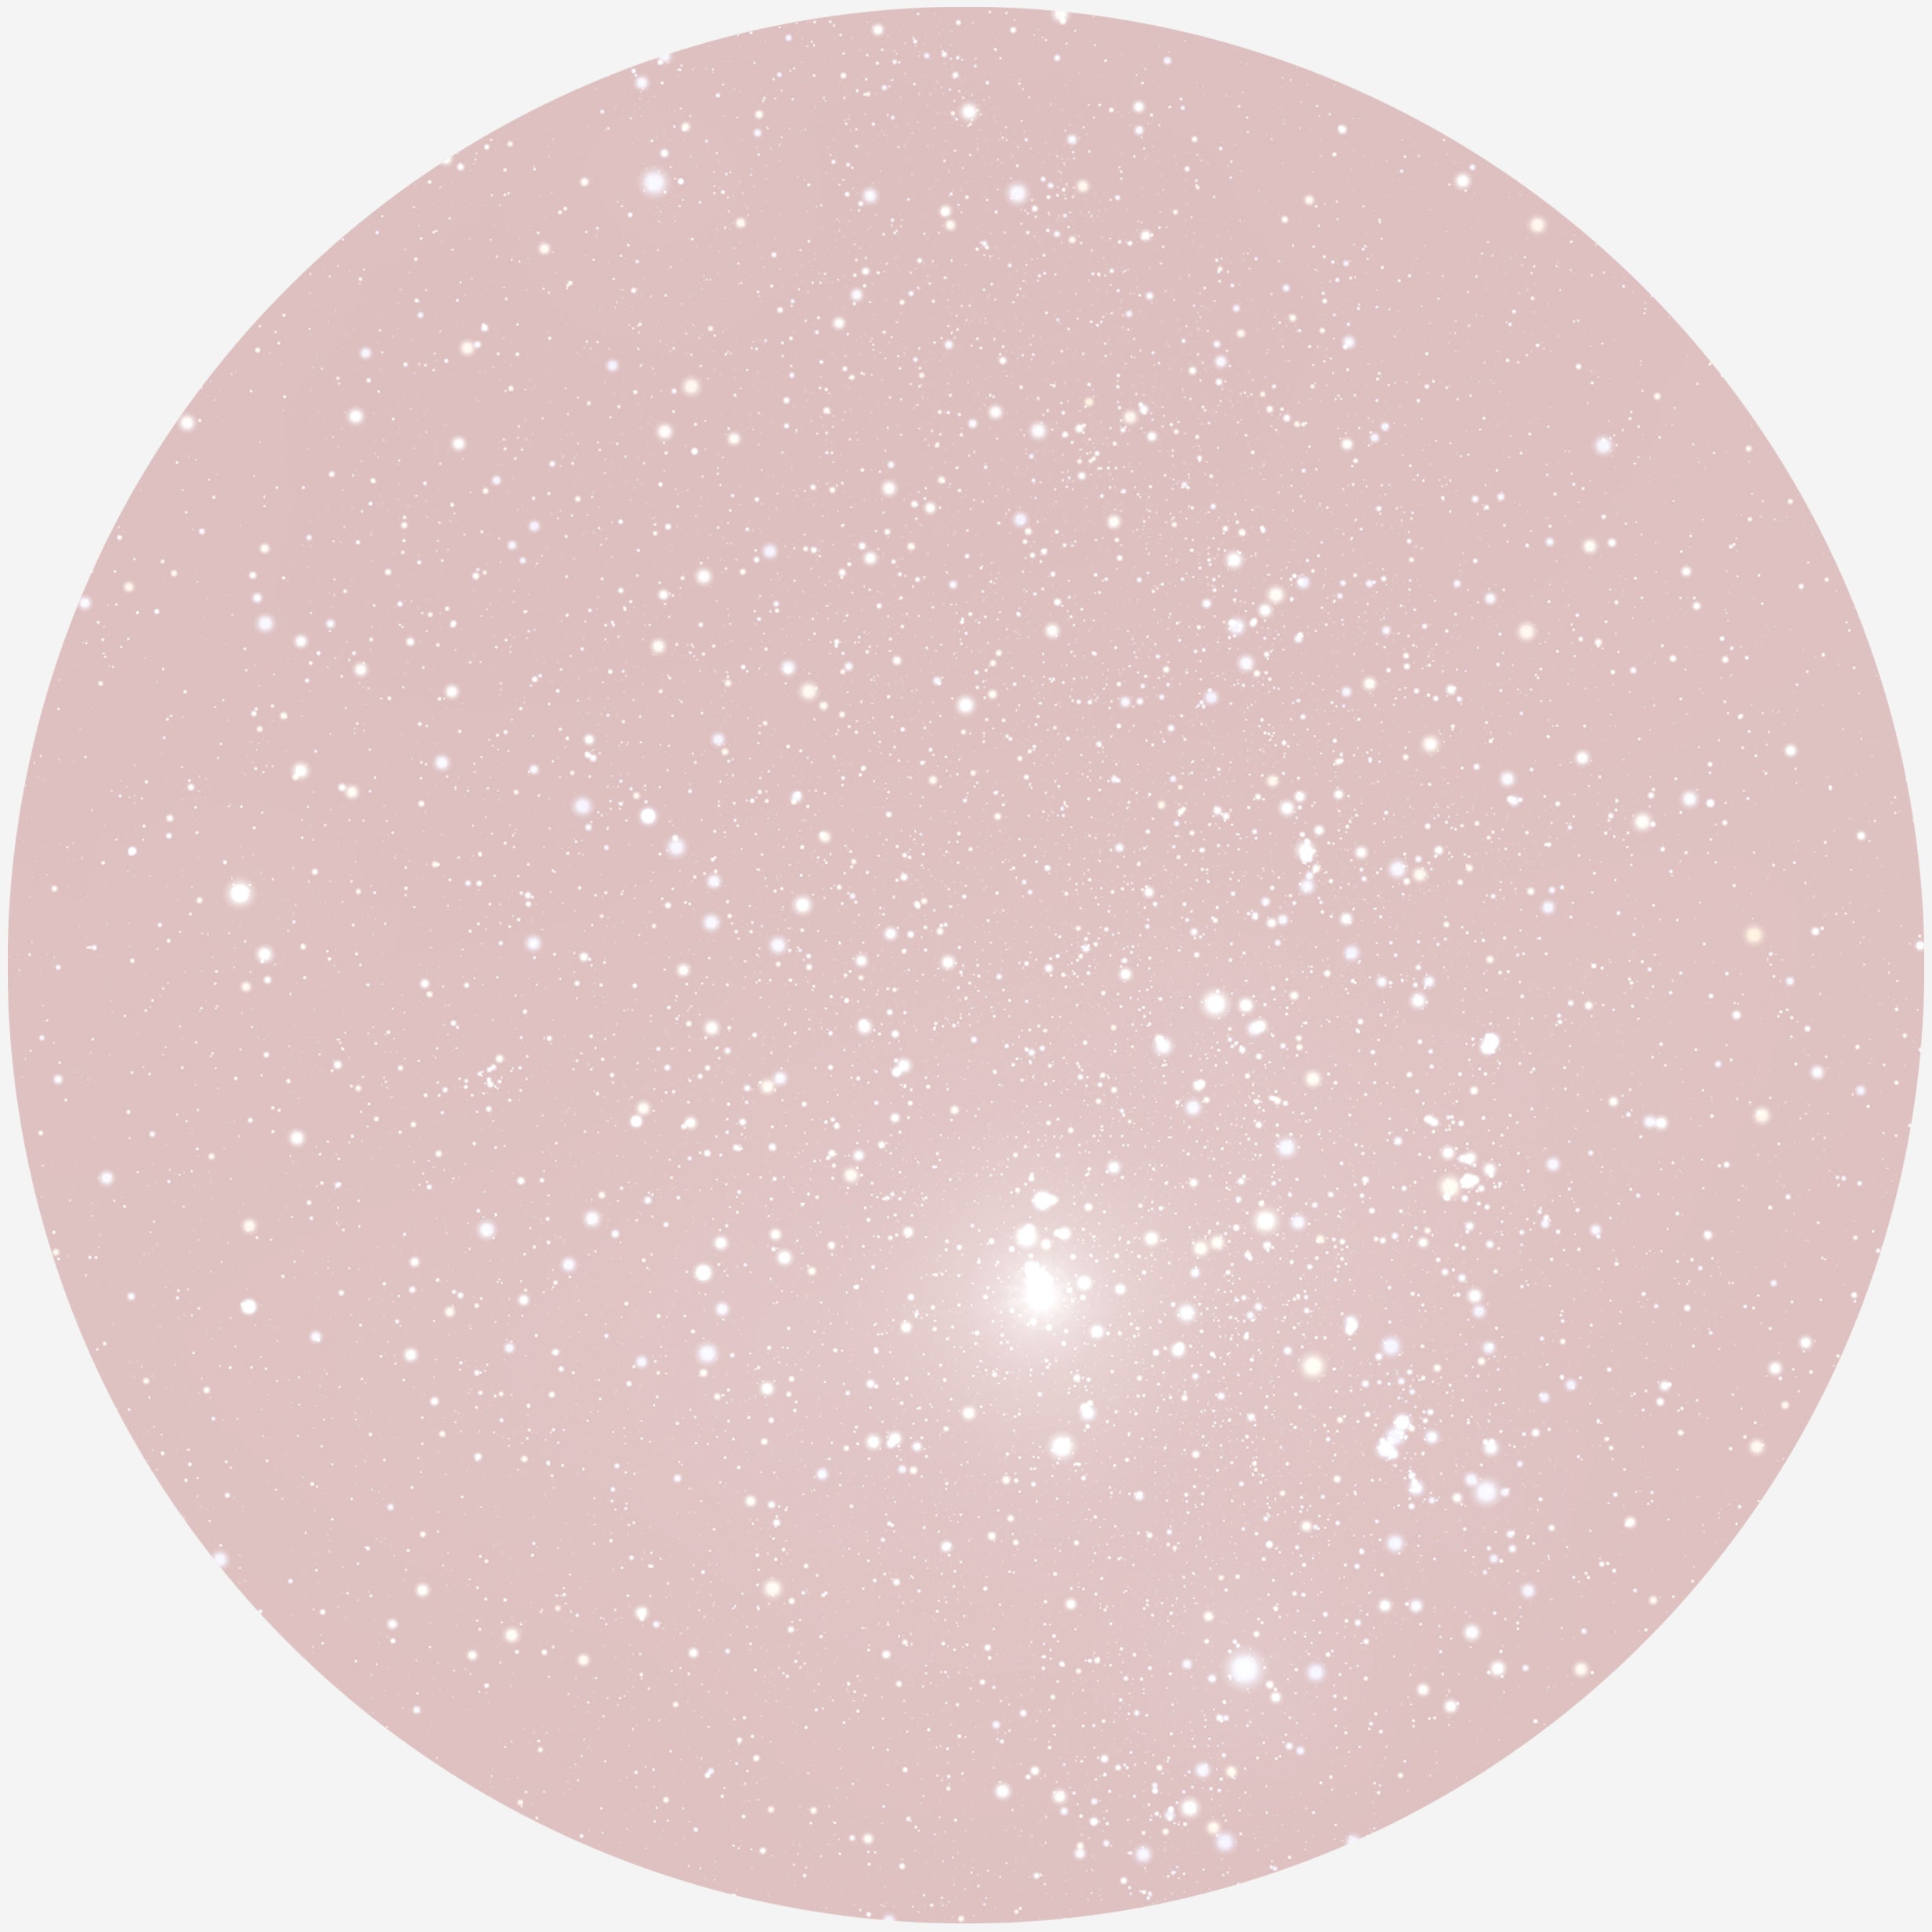 Se RUND PLAKAT MED PERSONLIG STJERNEHIMMEL (LYSERØD) - 30 cm / Klar stjernehimmel hos KISPUS